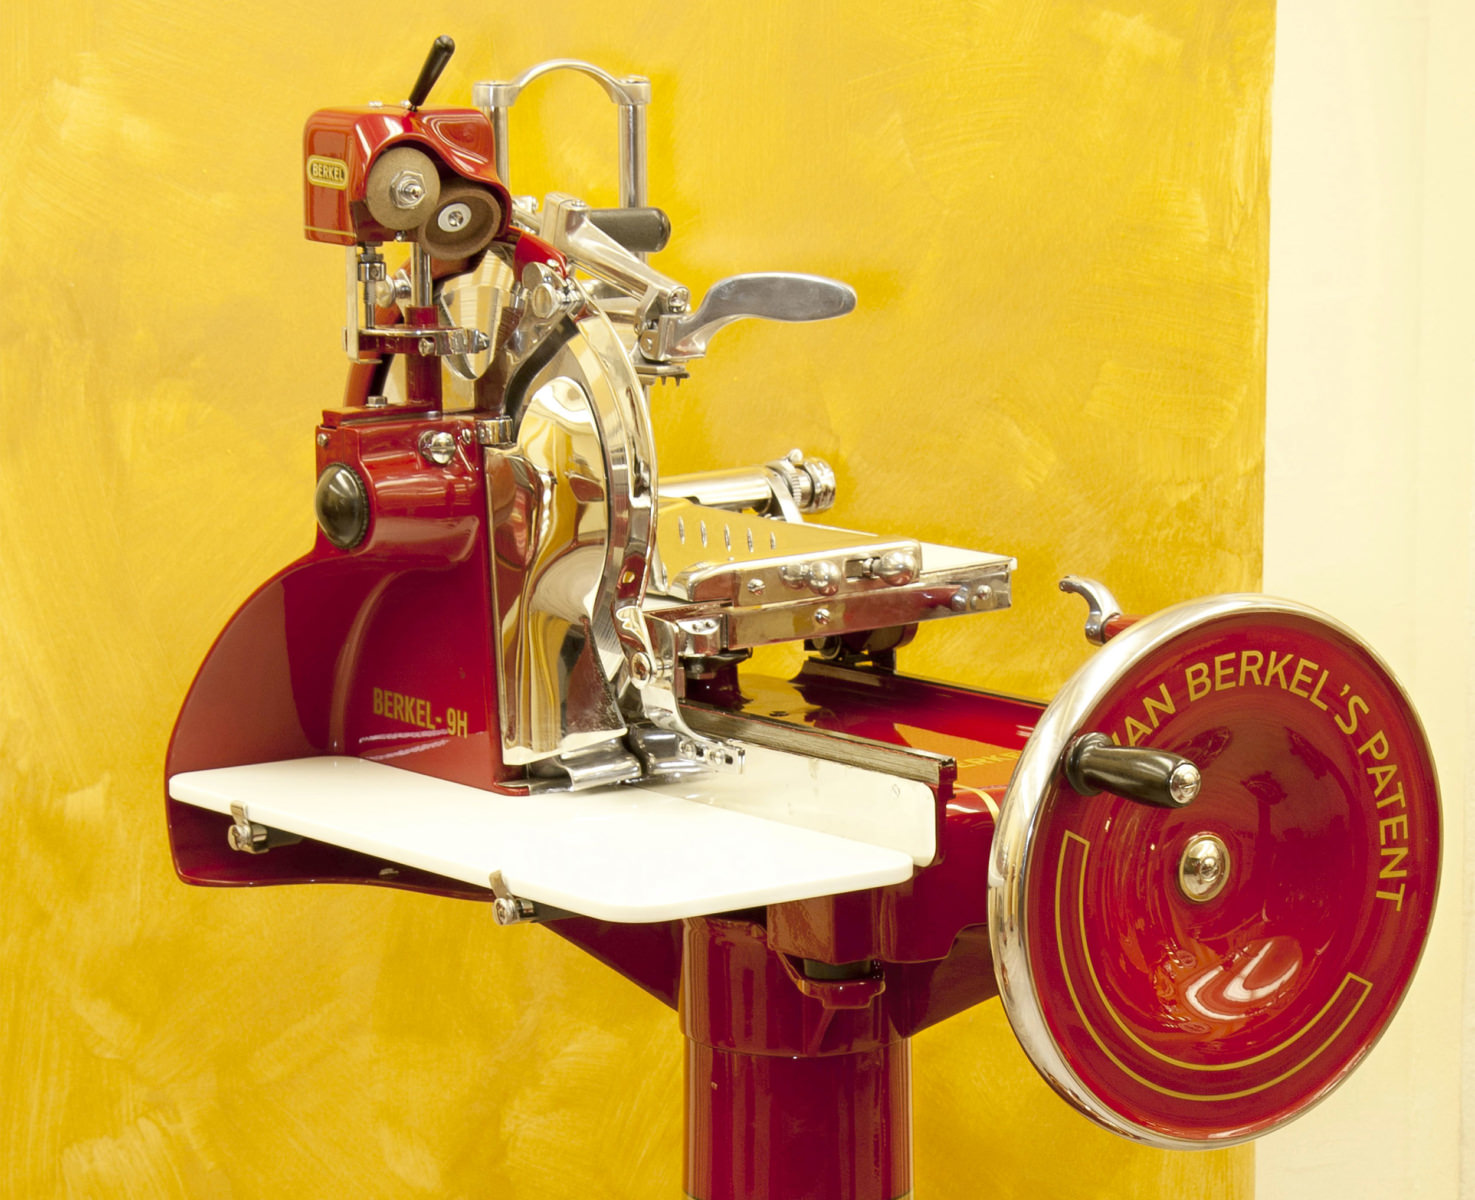 Berkel slicing machine model 9H red